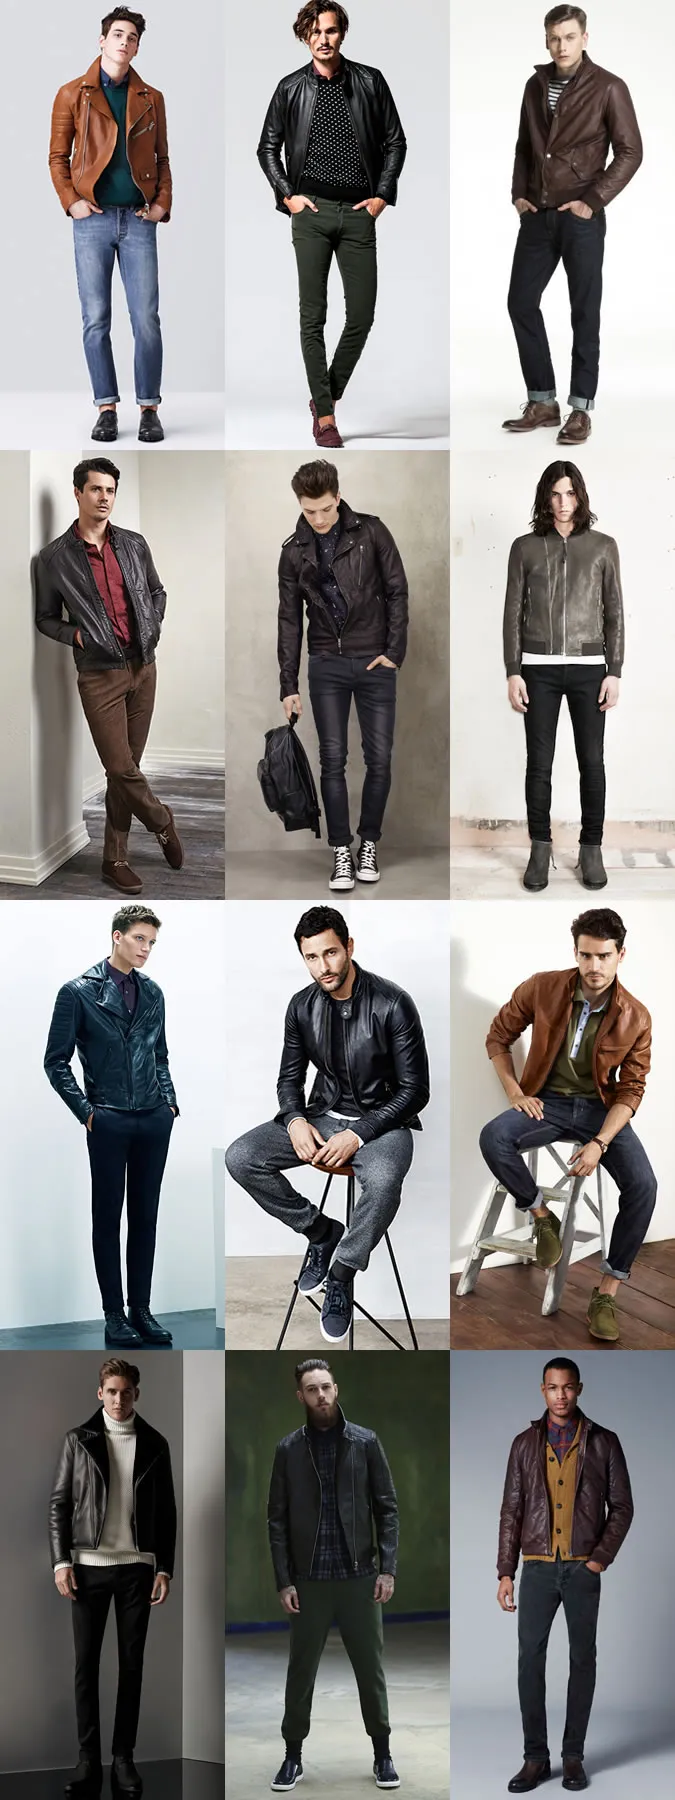 Look Book кожаных мужских курток